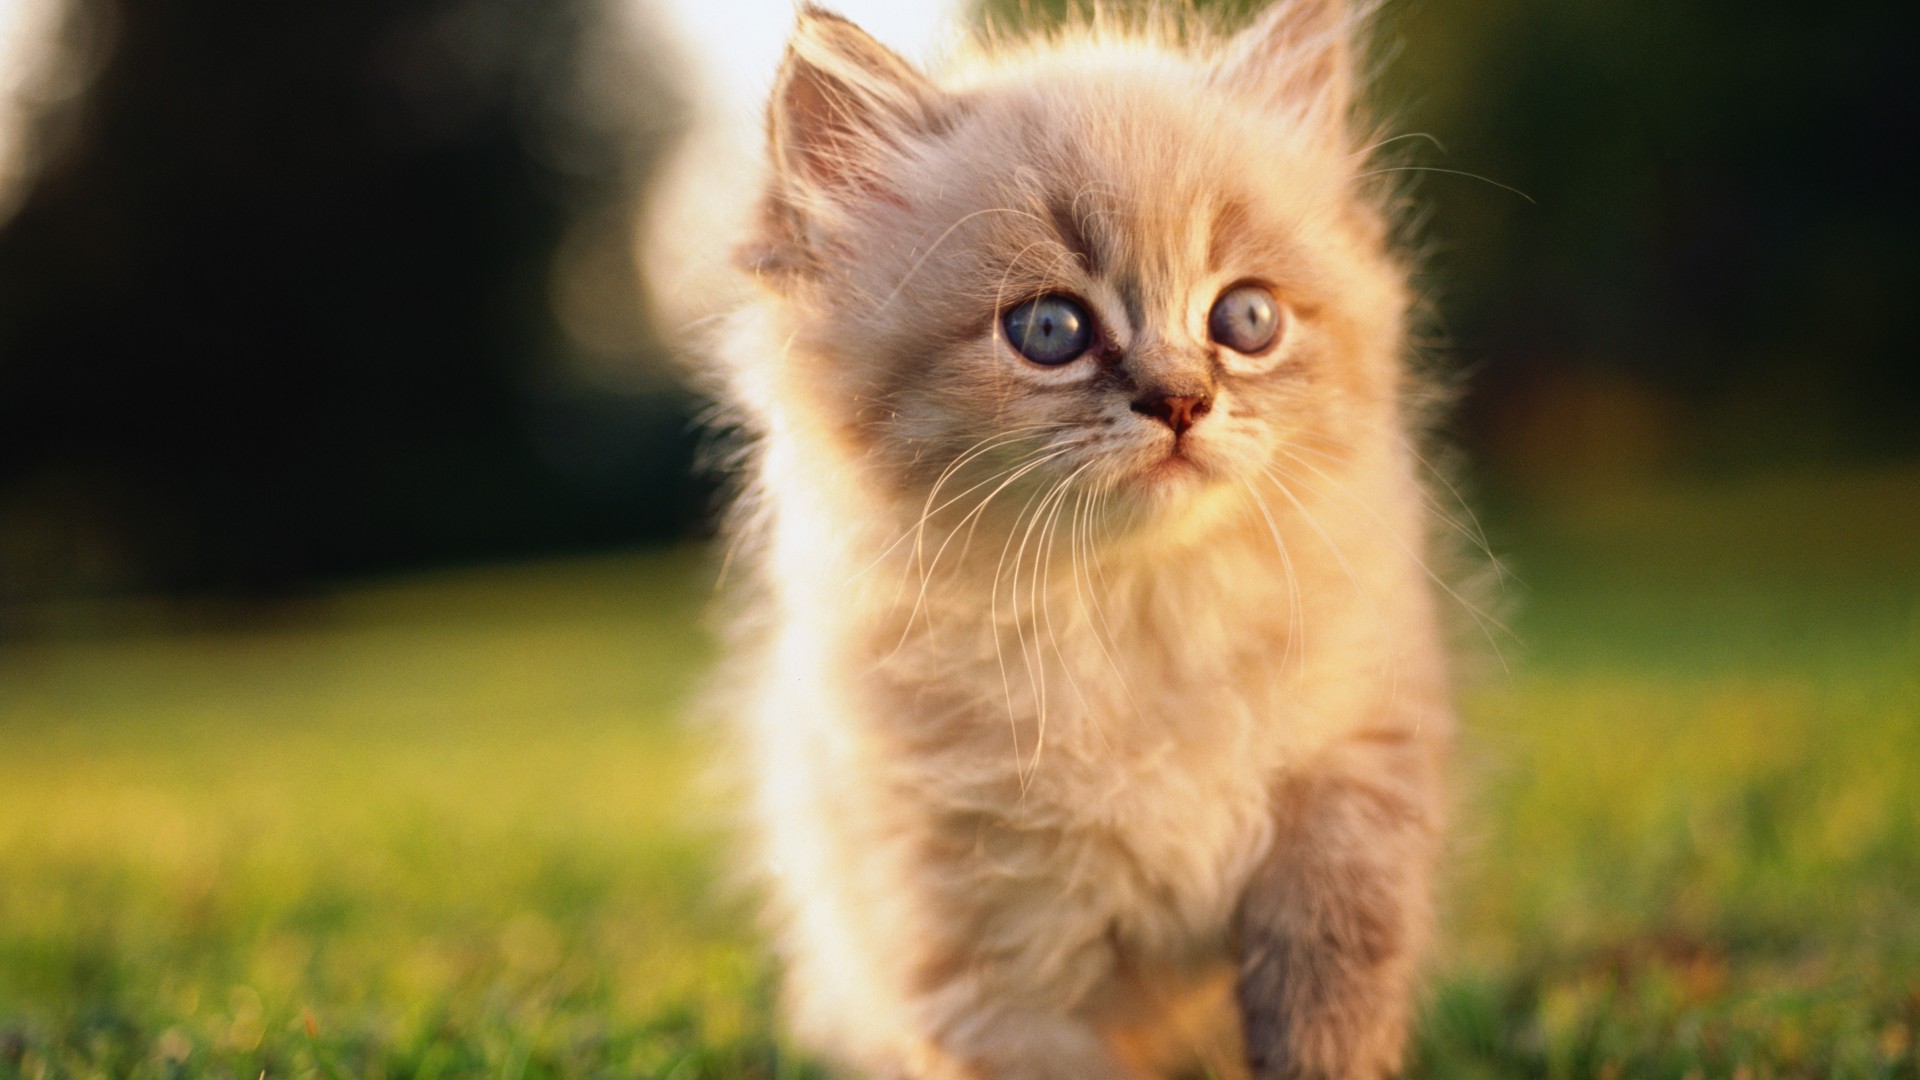 кошка, котенок, серый, шерсть, милый, животное, питомец, Cat, kitten, blue, eyes, gray, wool, cute, animal, pet, green grass, nature (horizontal)